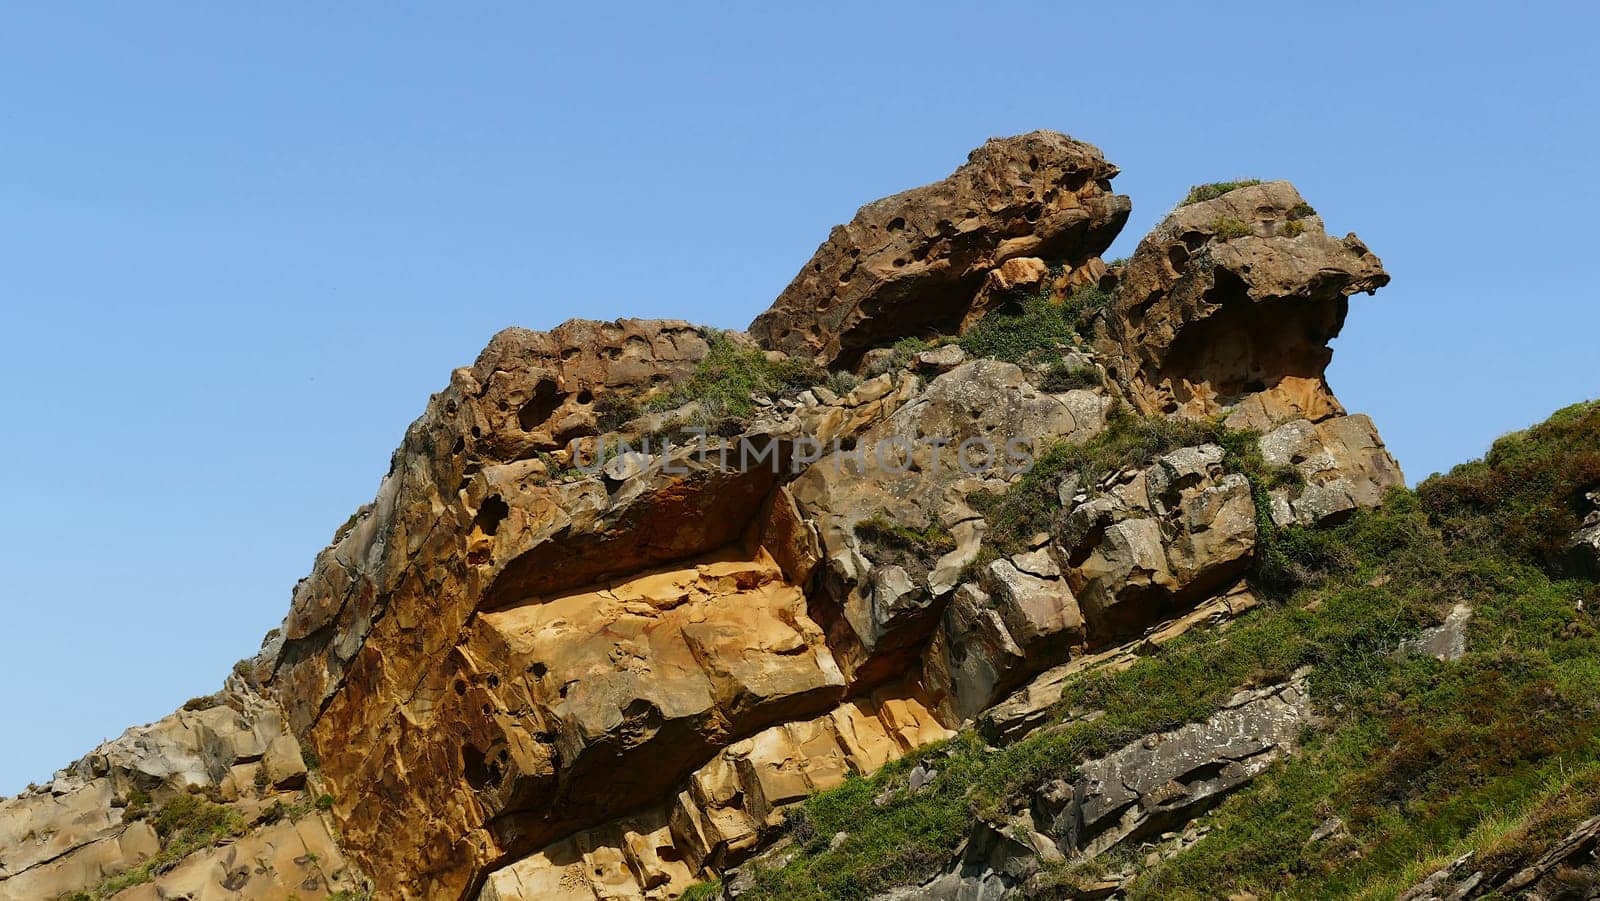 Cantabrian Sea coast in the Basque Country. Erosion on the rocks of Mount Jaizkibel. by XabiDonostia